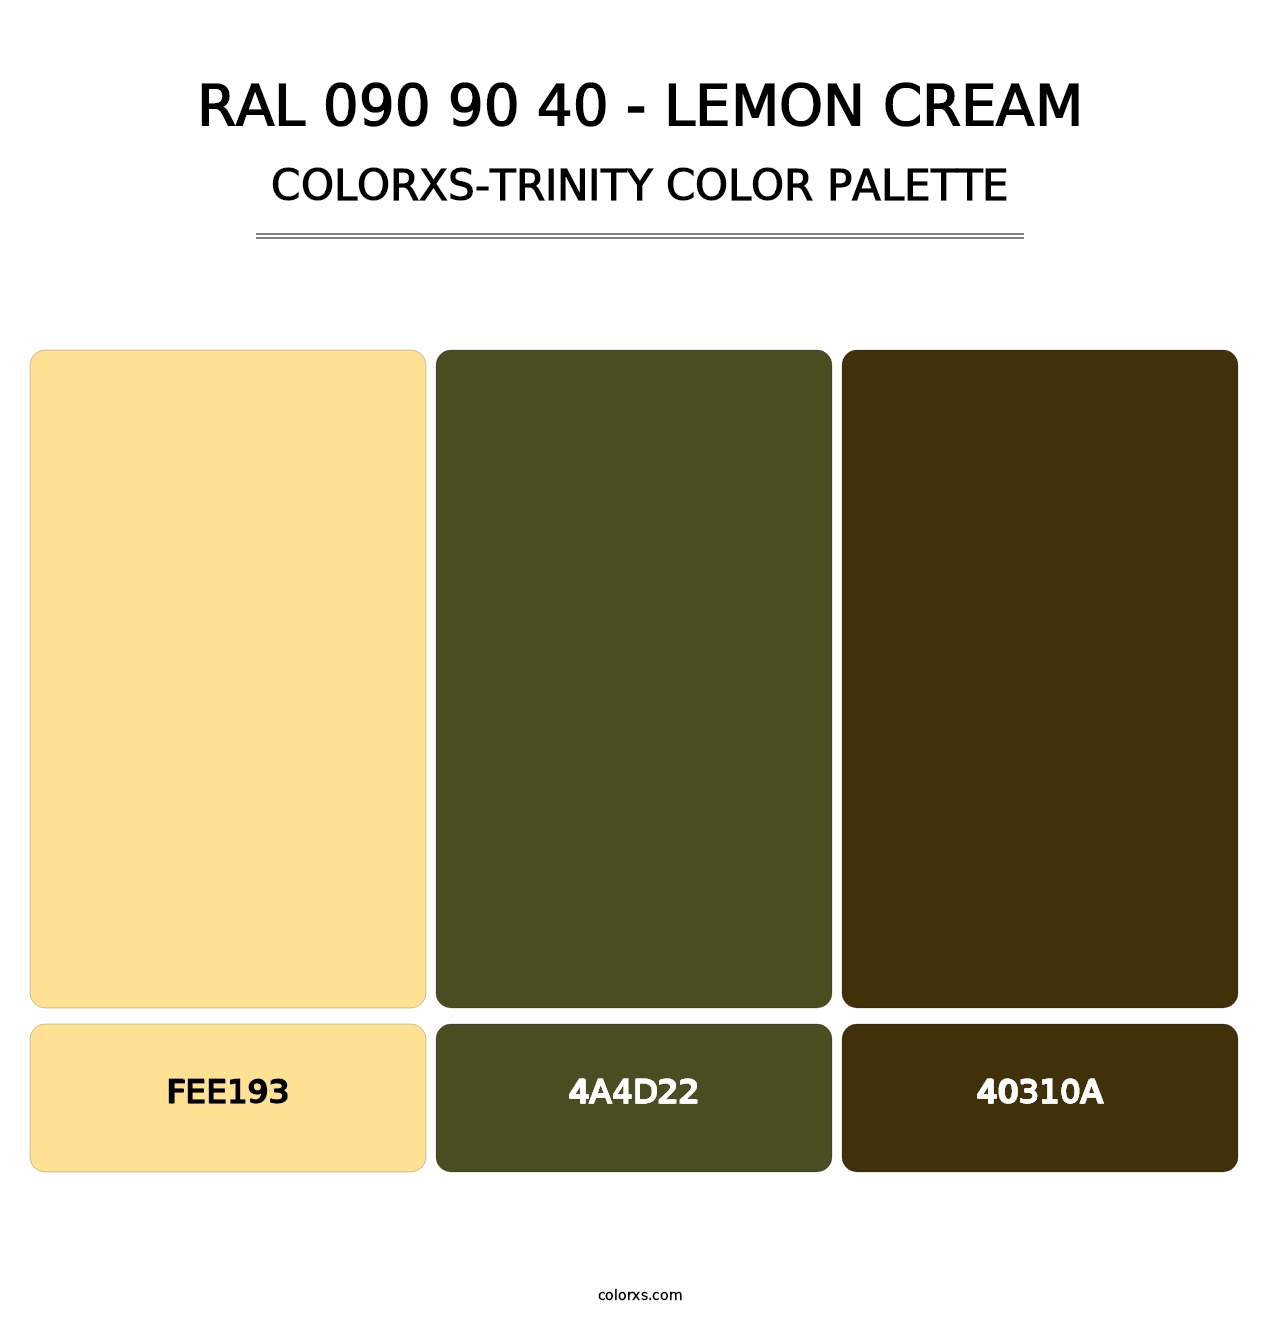 RAL 090 90 40 - Lemon Cream - Colorxs Trinity Palette